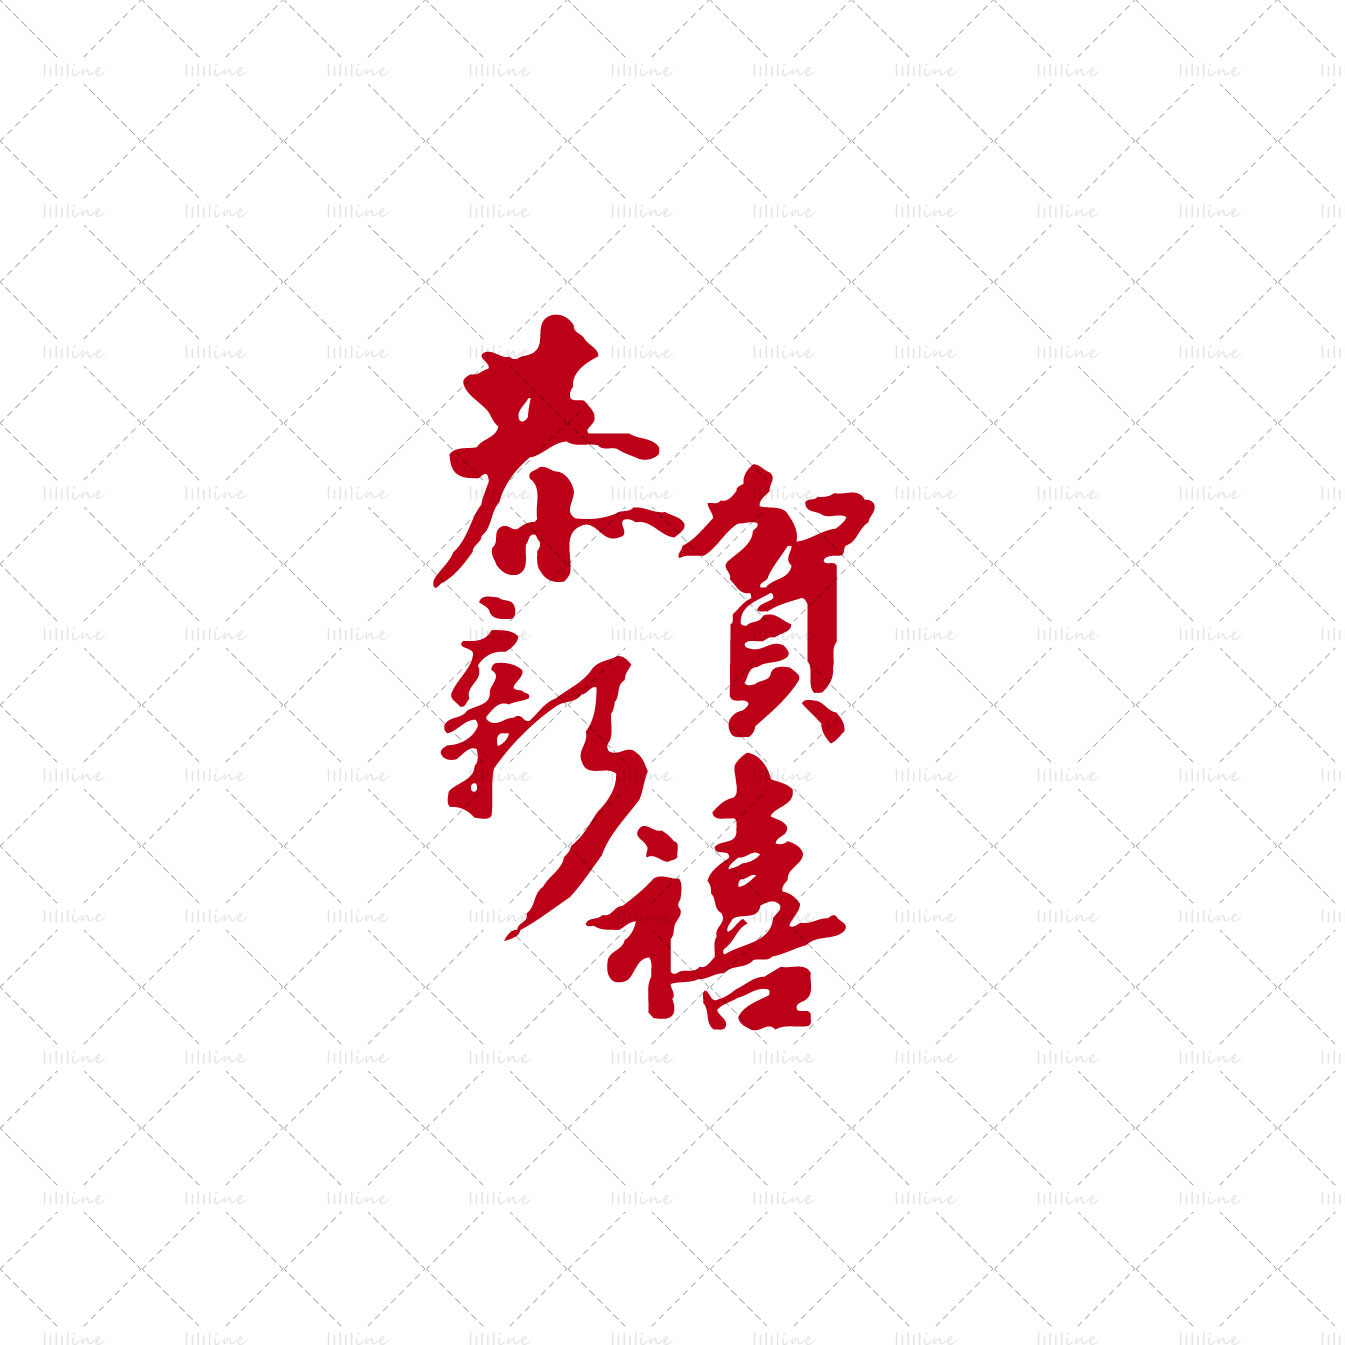 kínai szavak boldog új évet totem tattoo pattern vi eps pdf